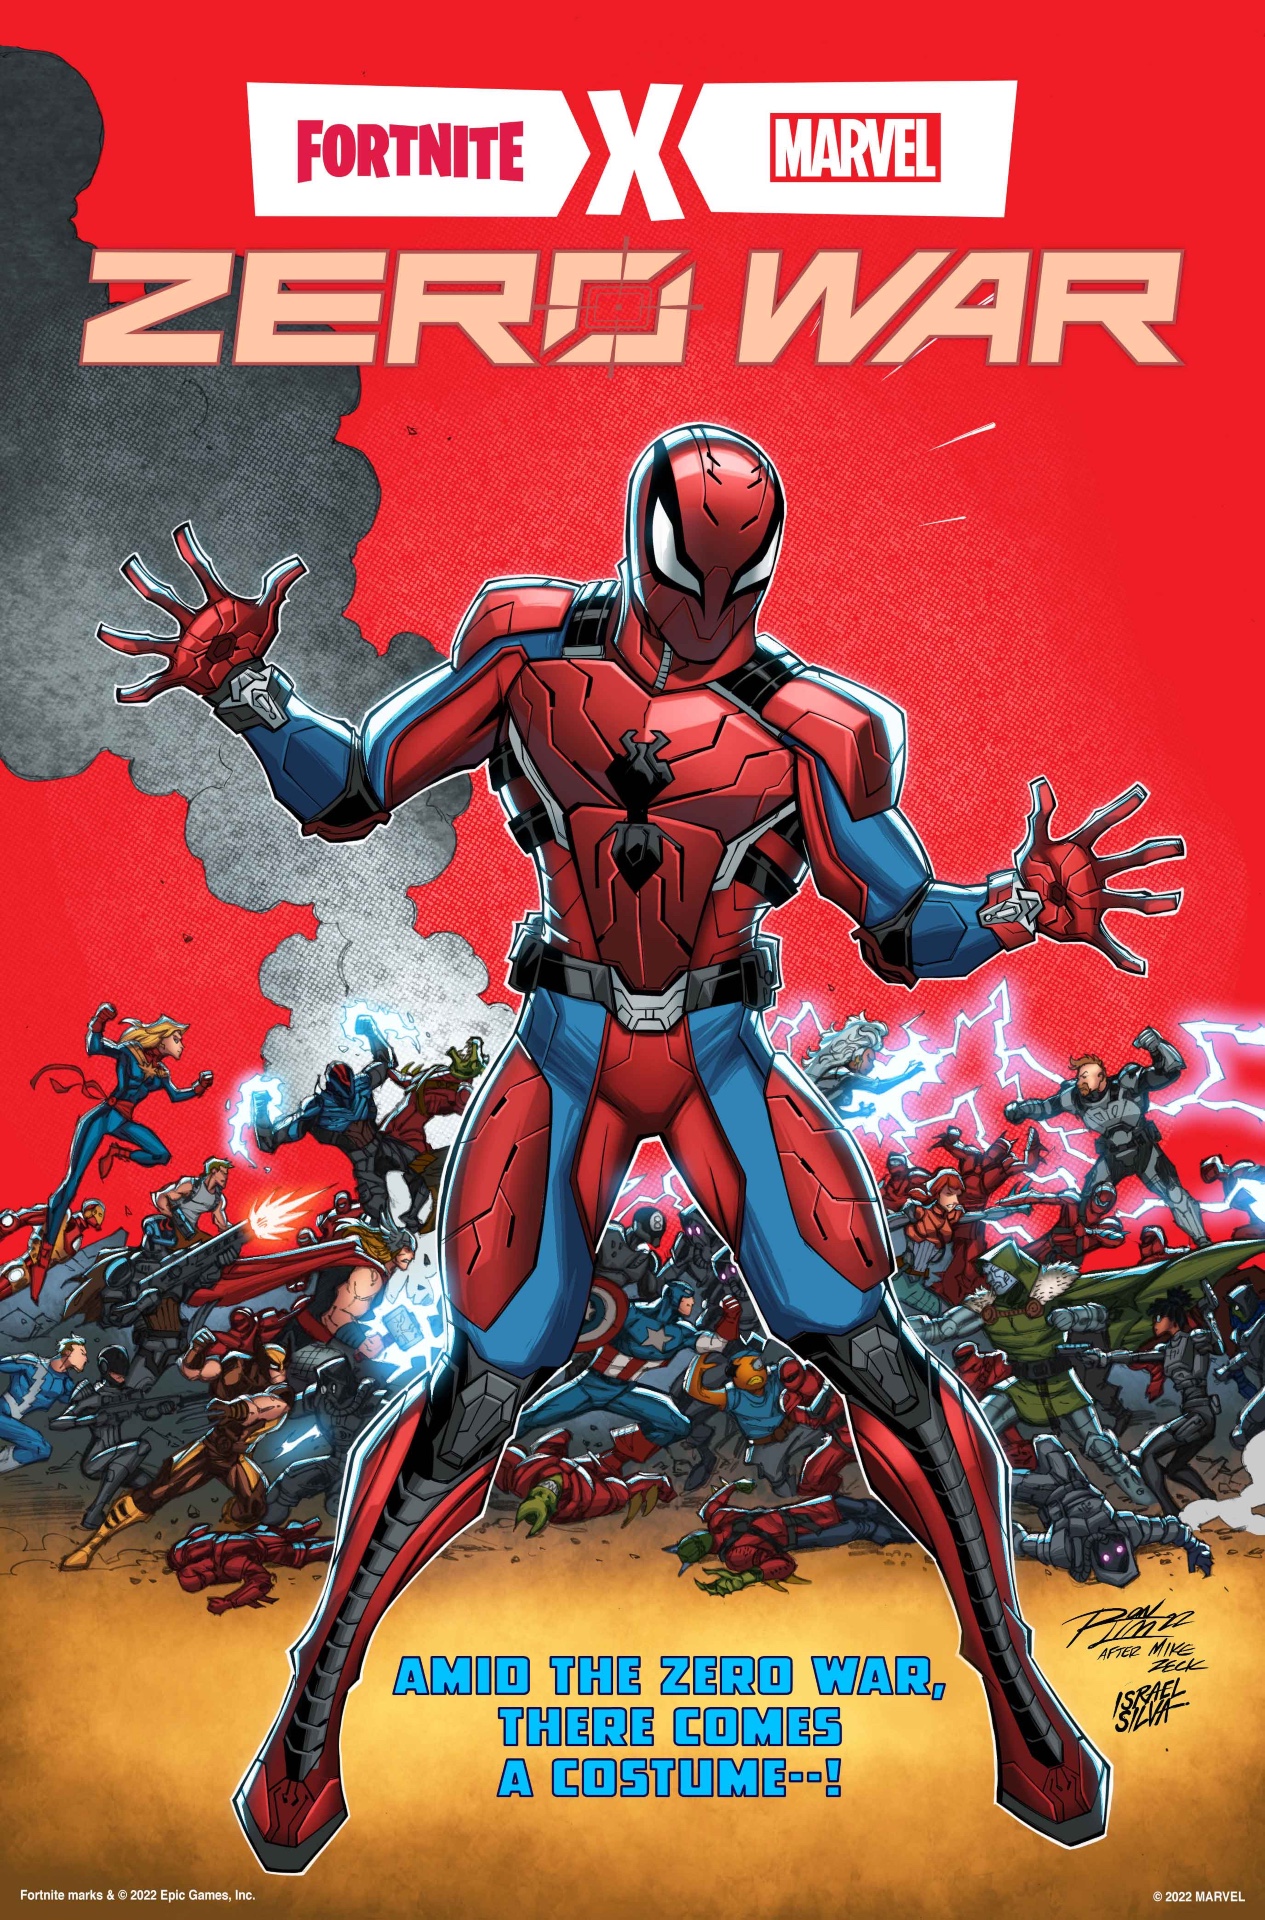 Fortnite X Marvel: Arte promocional de Zero War